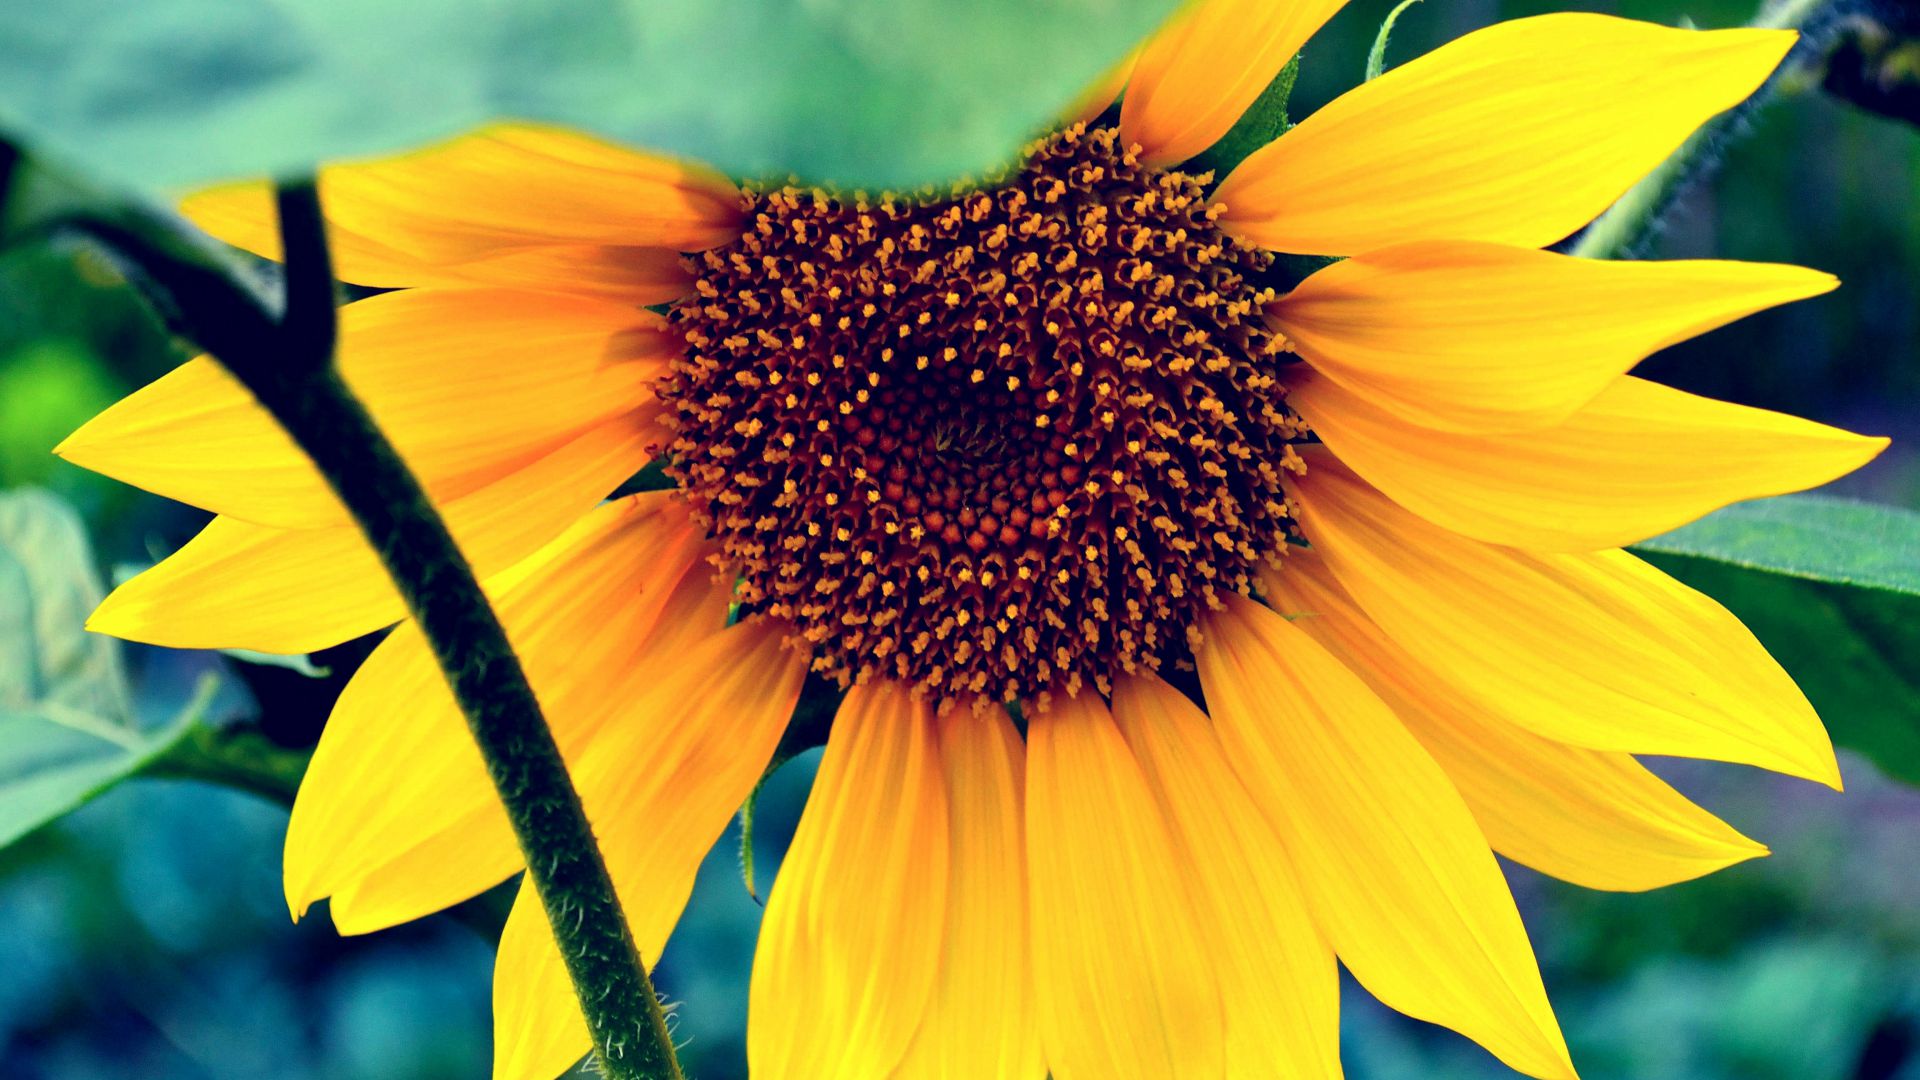 Подсолнечник, HD, 4k, макро, цветы, желтый, Sunflower, HD, 4k wallpaper, macro, flowers, yellow (horizontal)